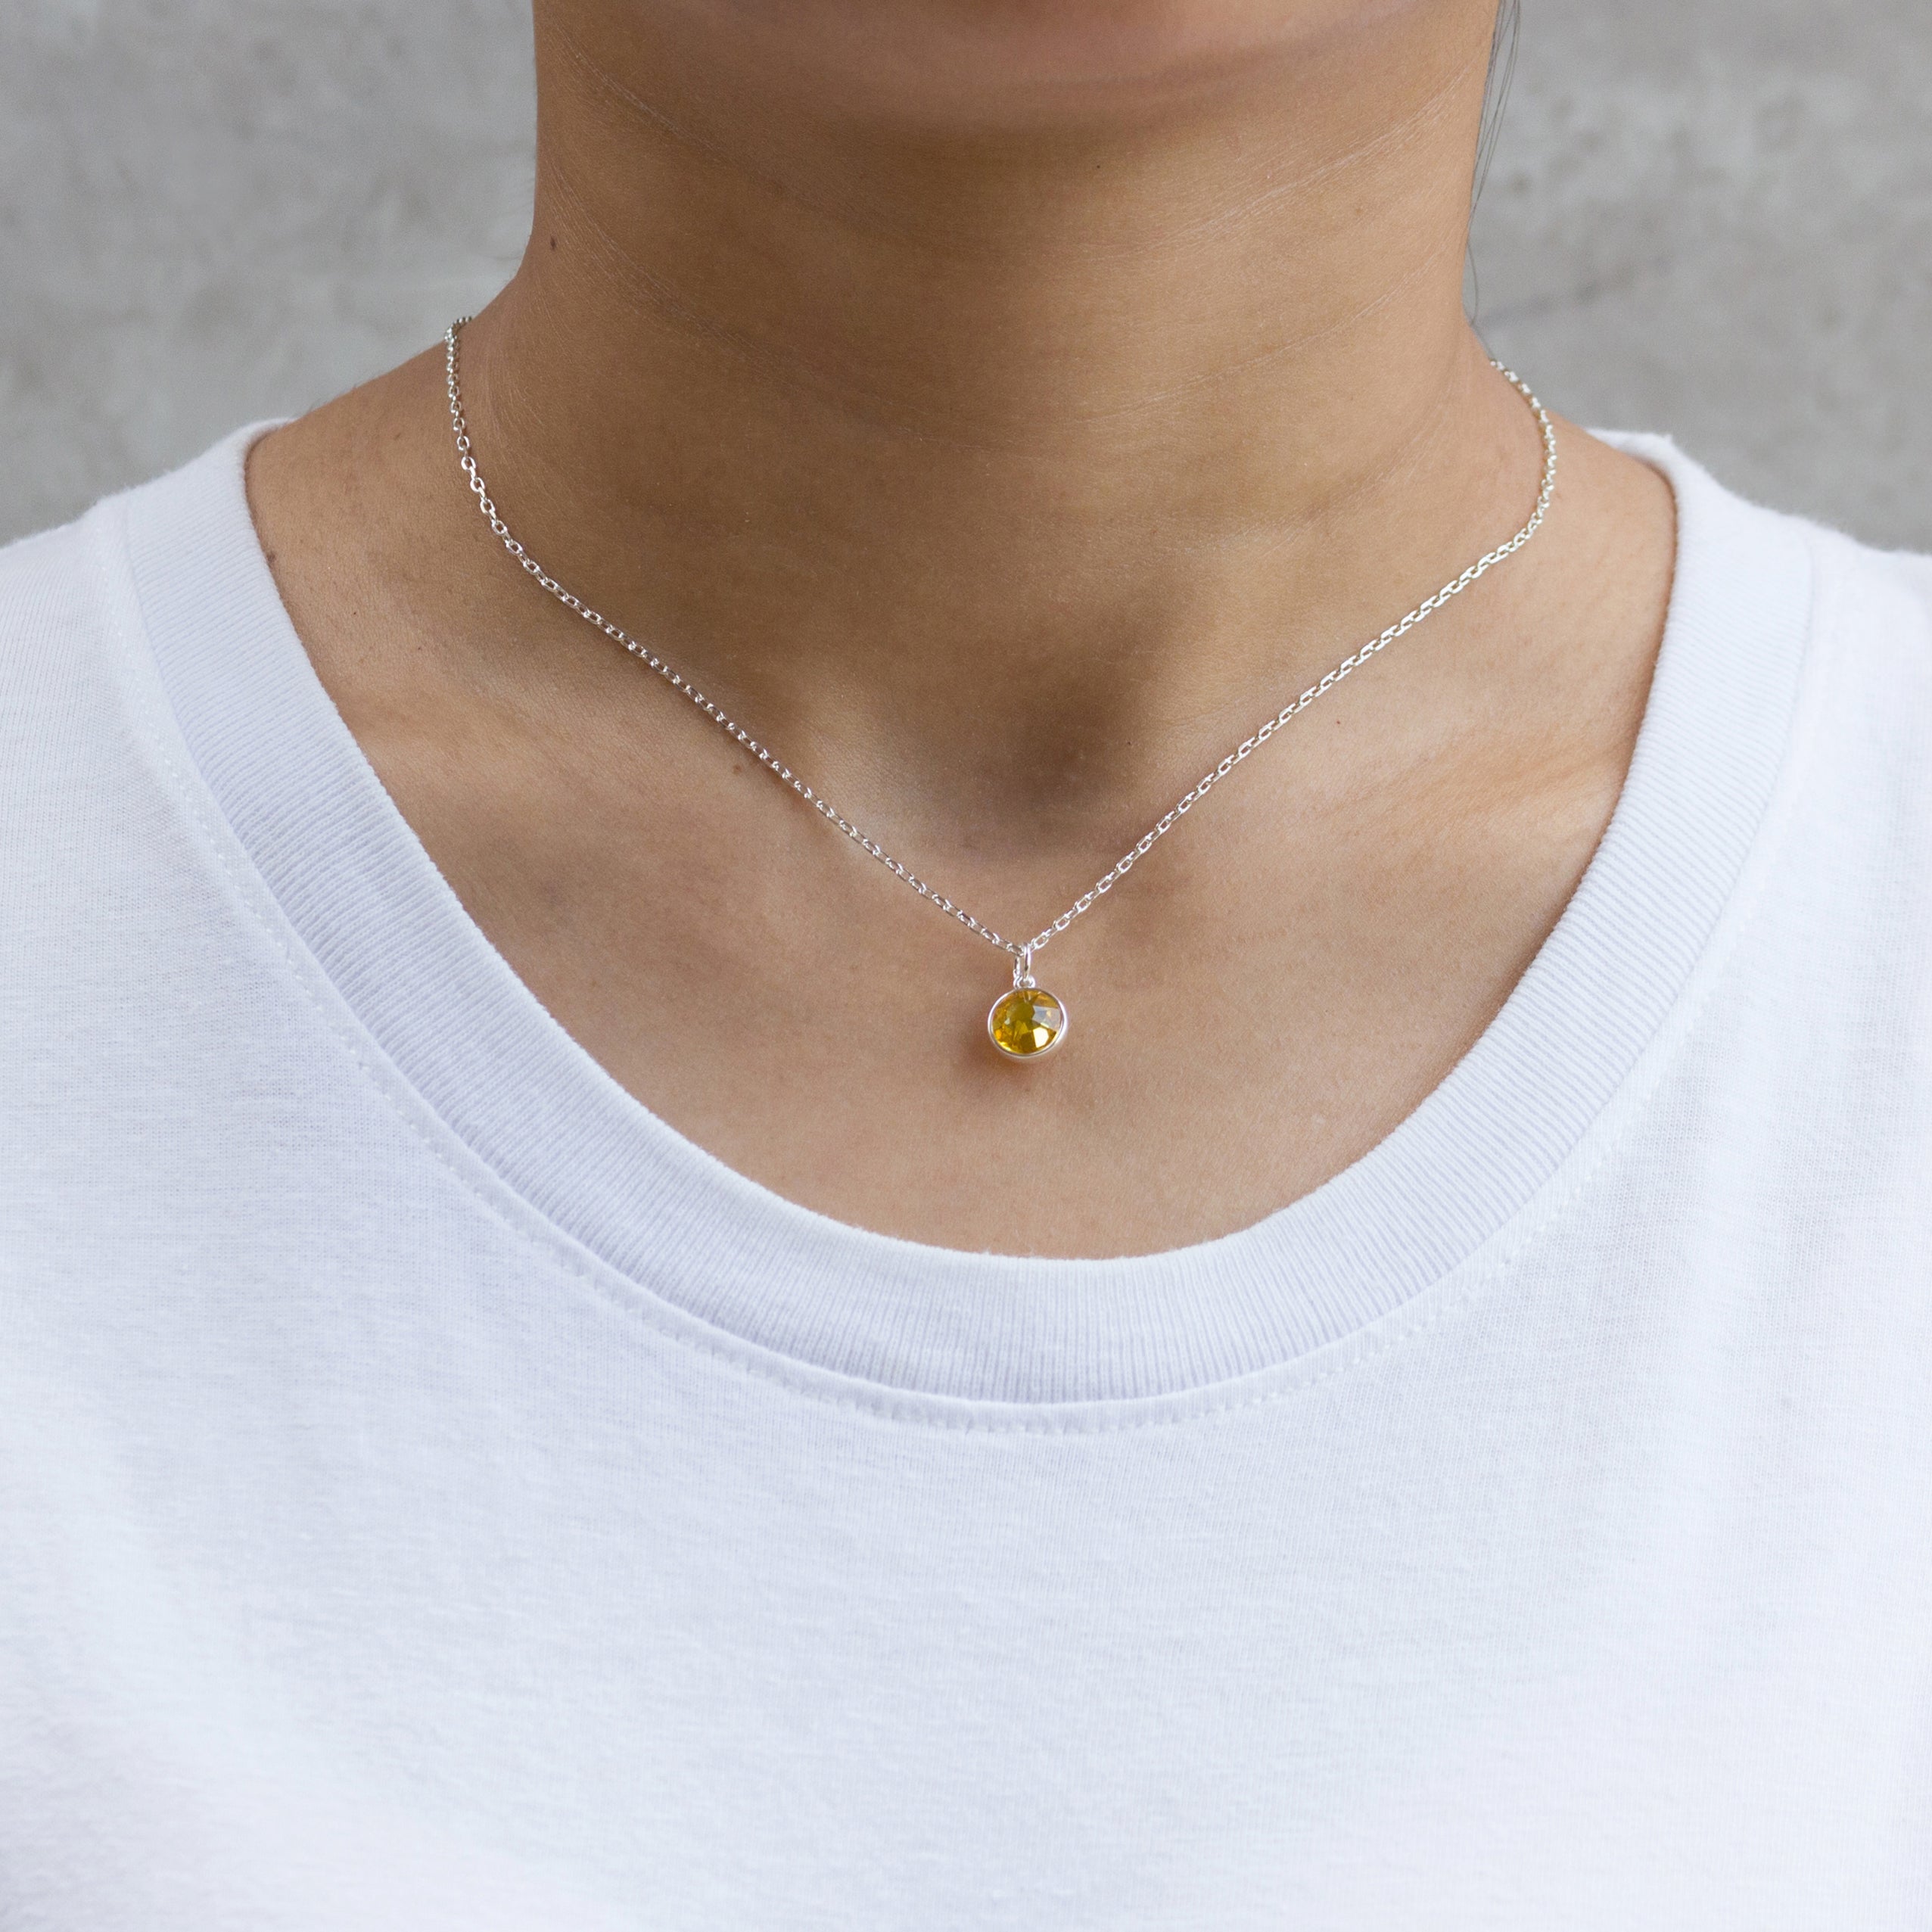 November (Topaz) Birthstone Necklace Created with Zircondia® Crystals